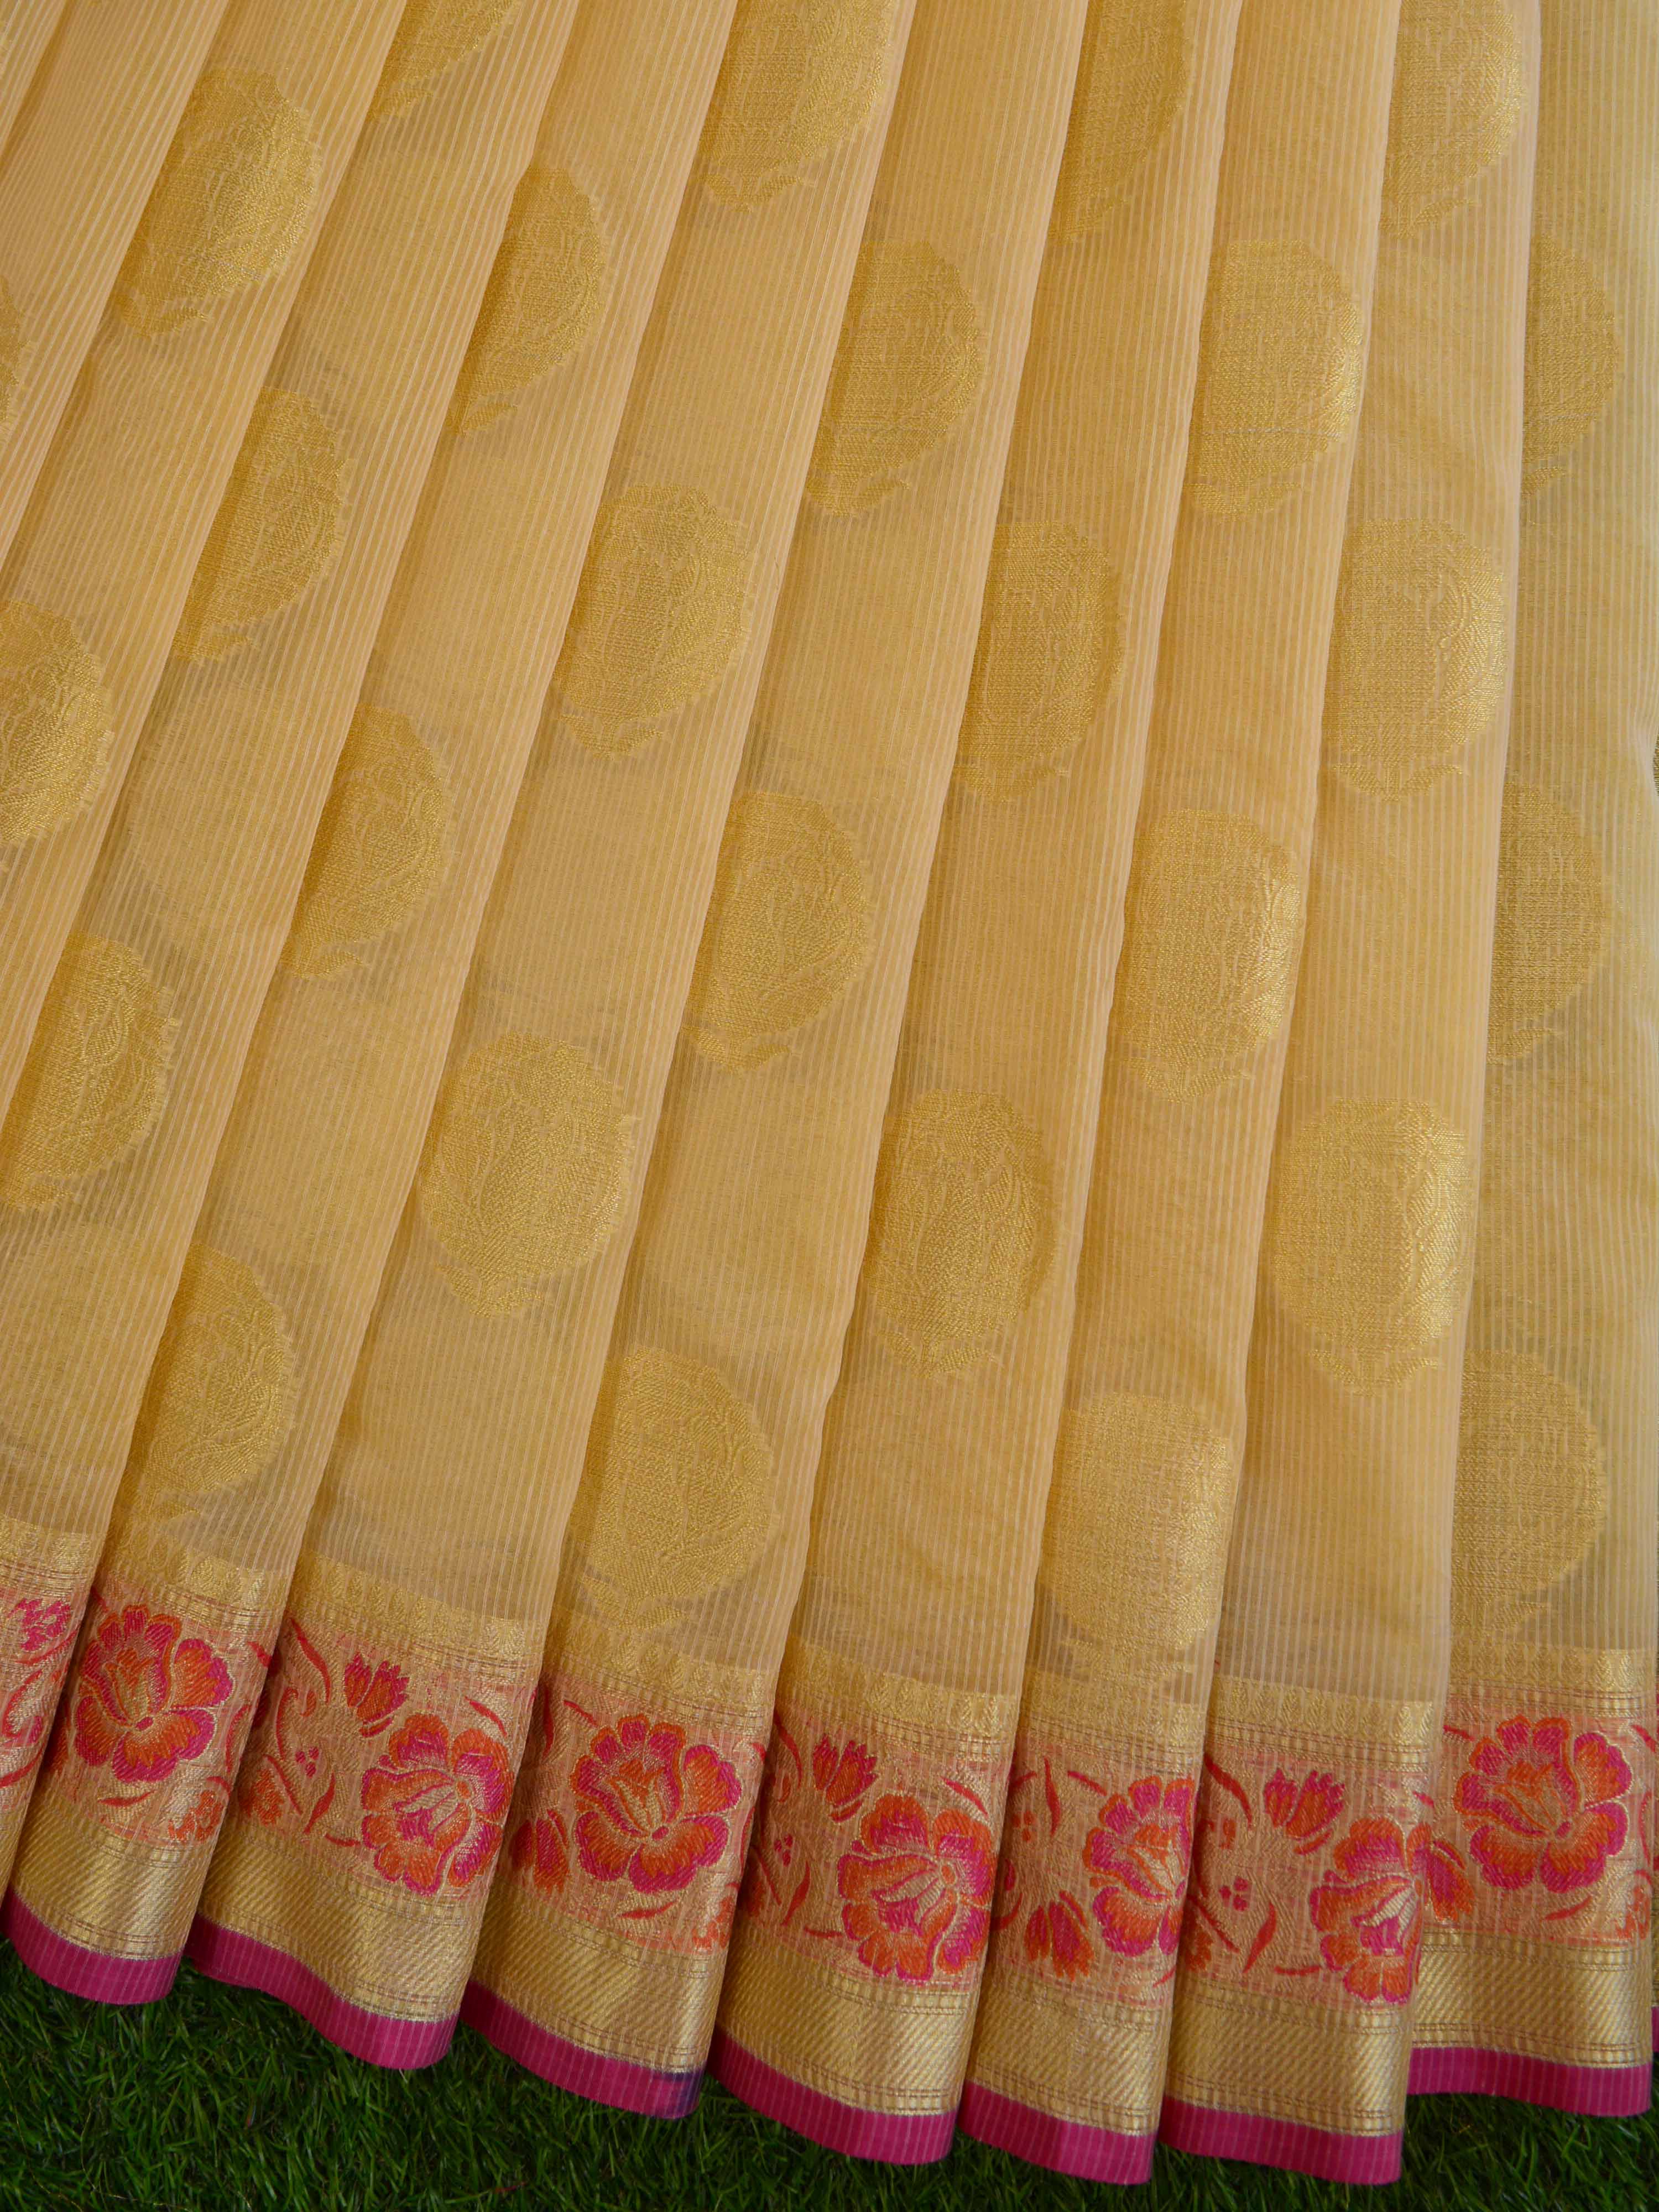 Banarasee Cotton Silk Mix Kota Checks Saree With Meena Floral Border-Ivory White